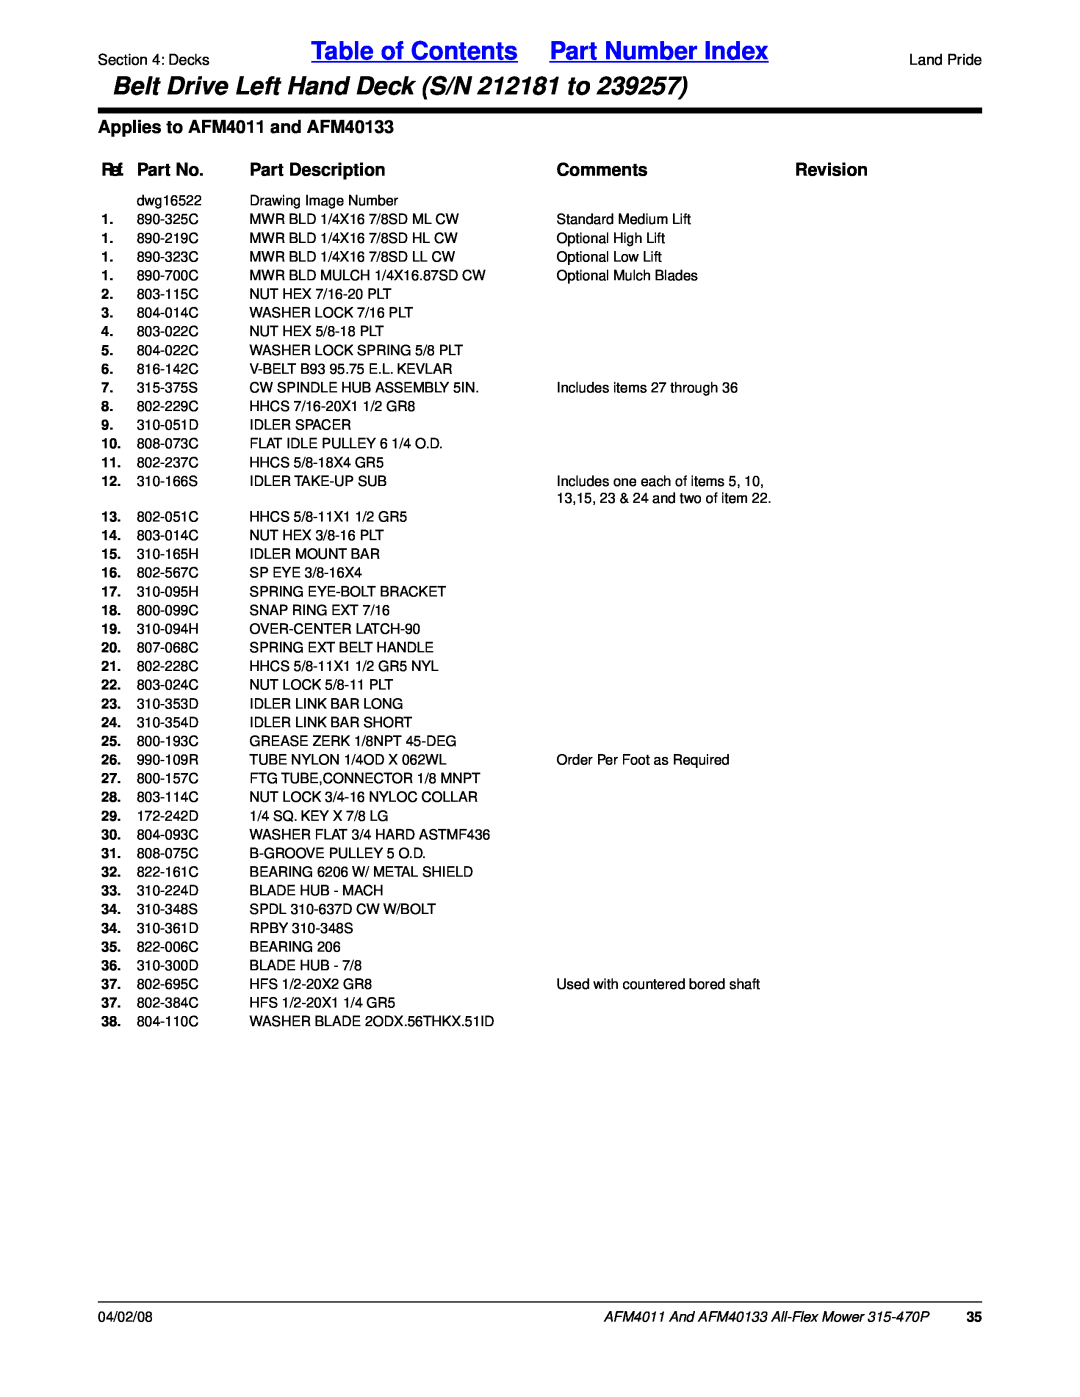 Land Pride AFM40133 Table of Contents Part Number Index, Belt Drive Left Hand Deck S/N 212181 to, Ref. Part No, Comments 